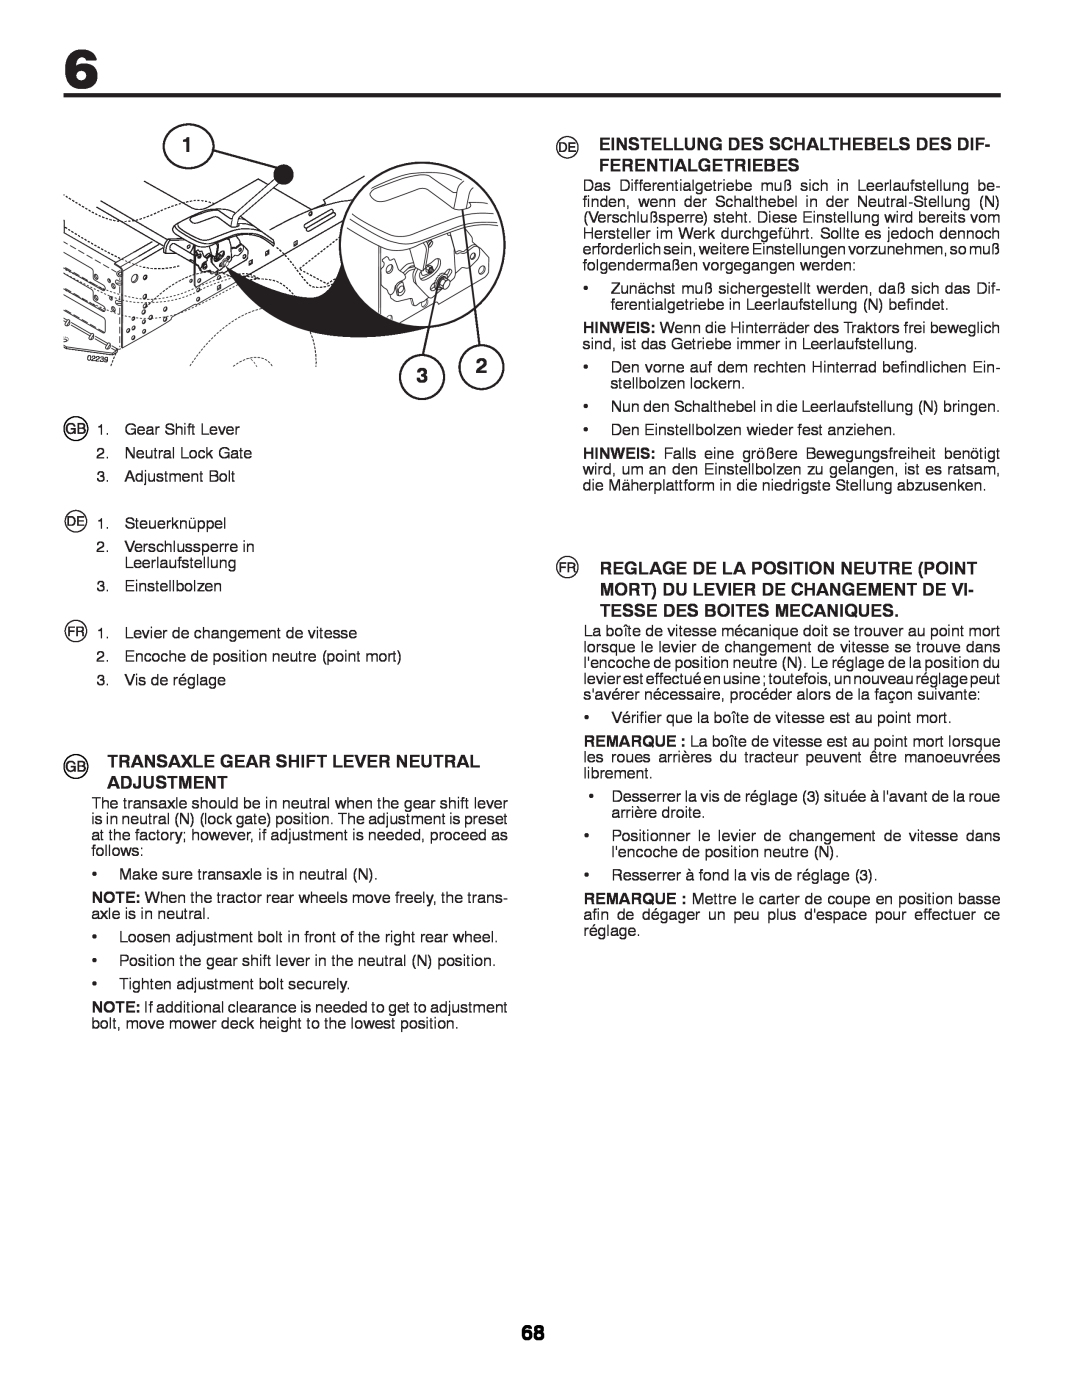 McCulloch 96041009101, 532 43 29-74 manual Transaxle Gear Shift Lever Neutral Adjustment 